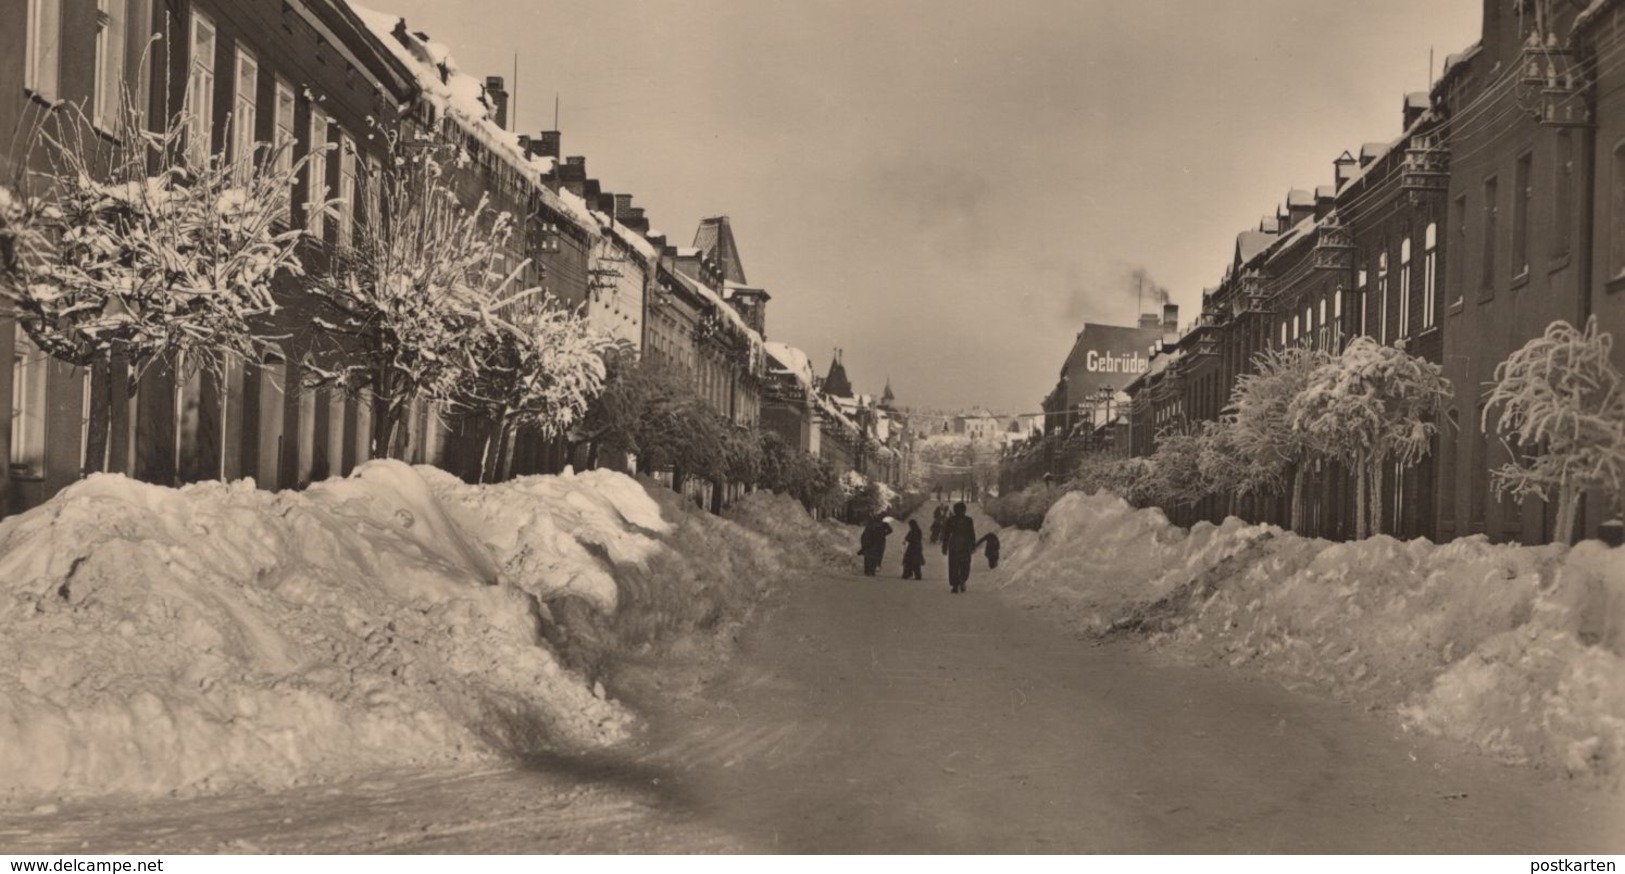 ALTE POSTKARTE SCHÖNECK VOGTLAND DR. KÜLZ-STRASSE Winter Schnee Snow Cpa AK Ansichtskarte Postcard - Vogtland